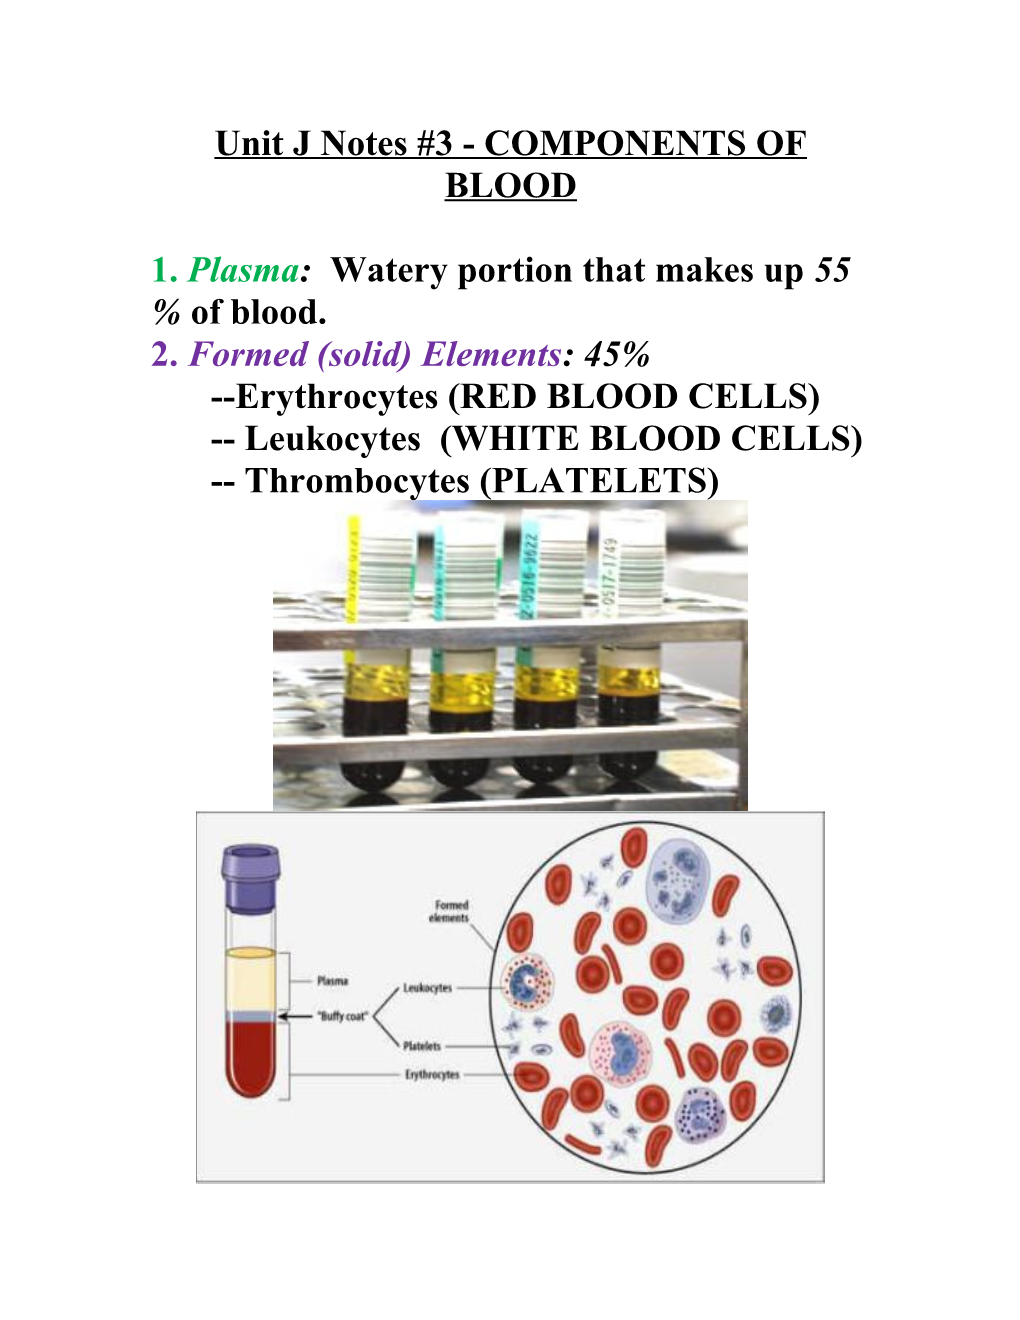 Unit J Notes #3 - COMPONENTS of BLOOD